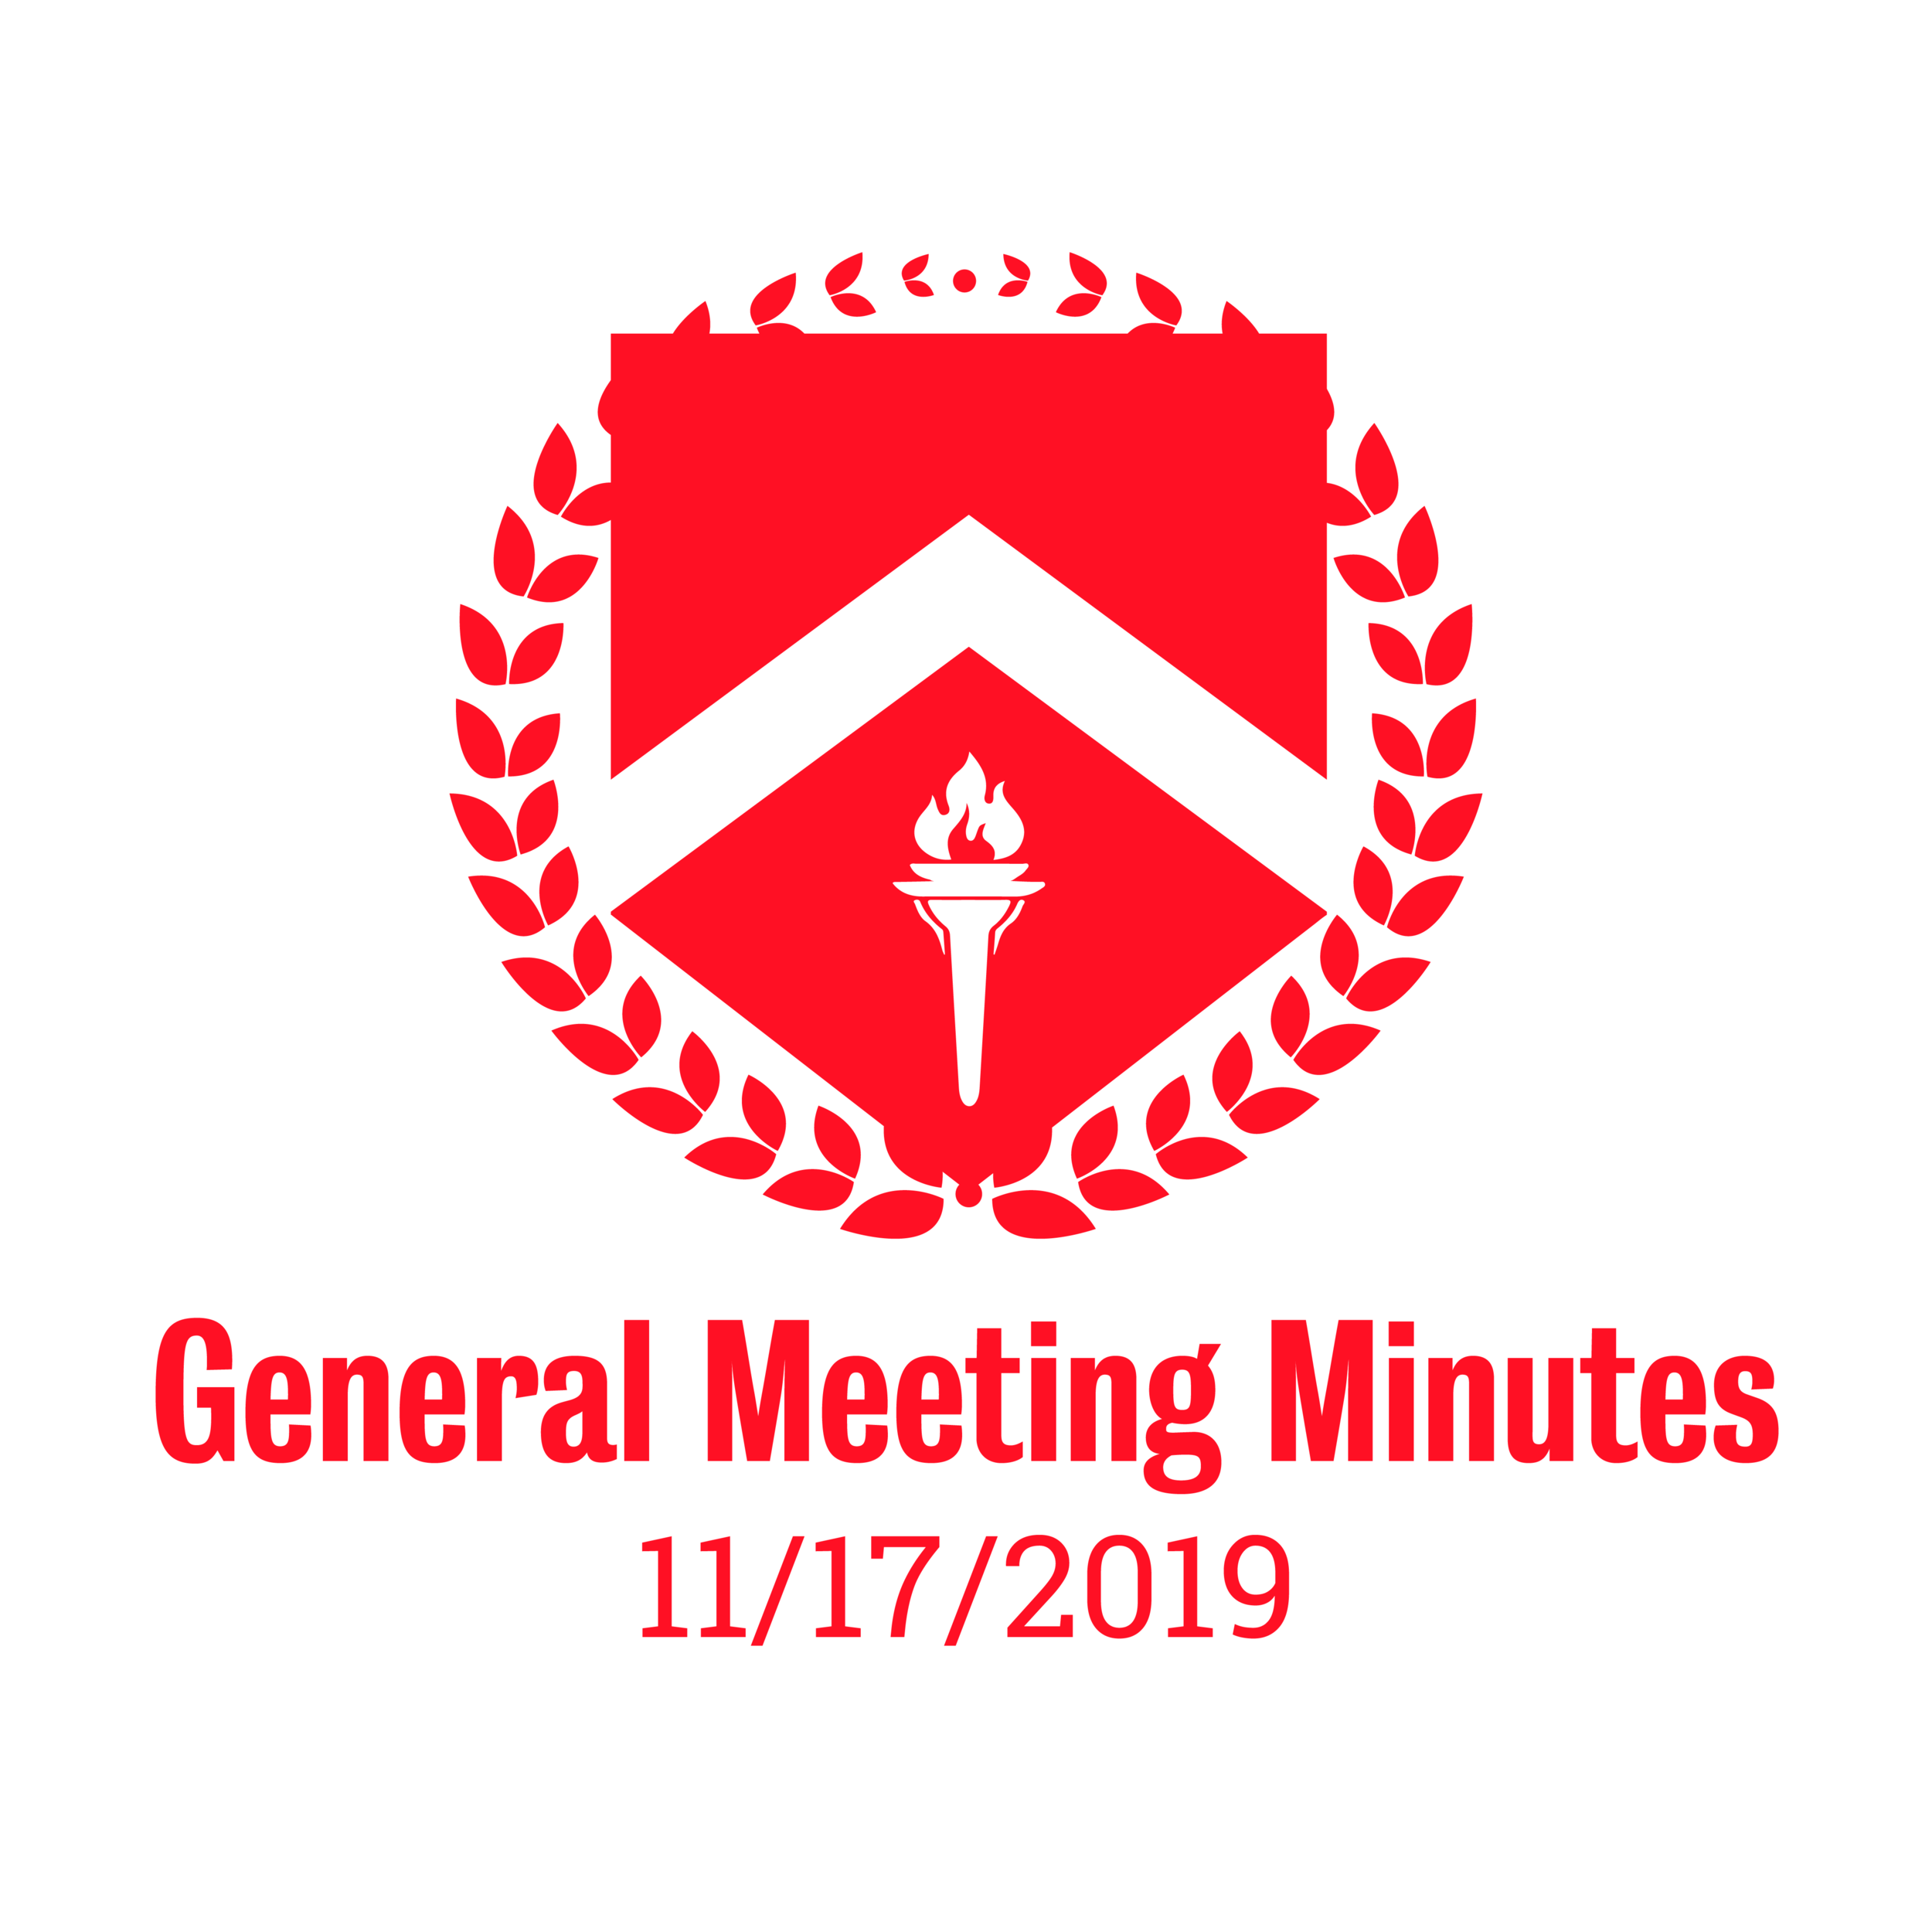 General Meeting Minutes 11/17/2019